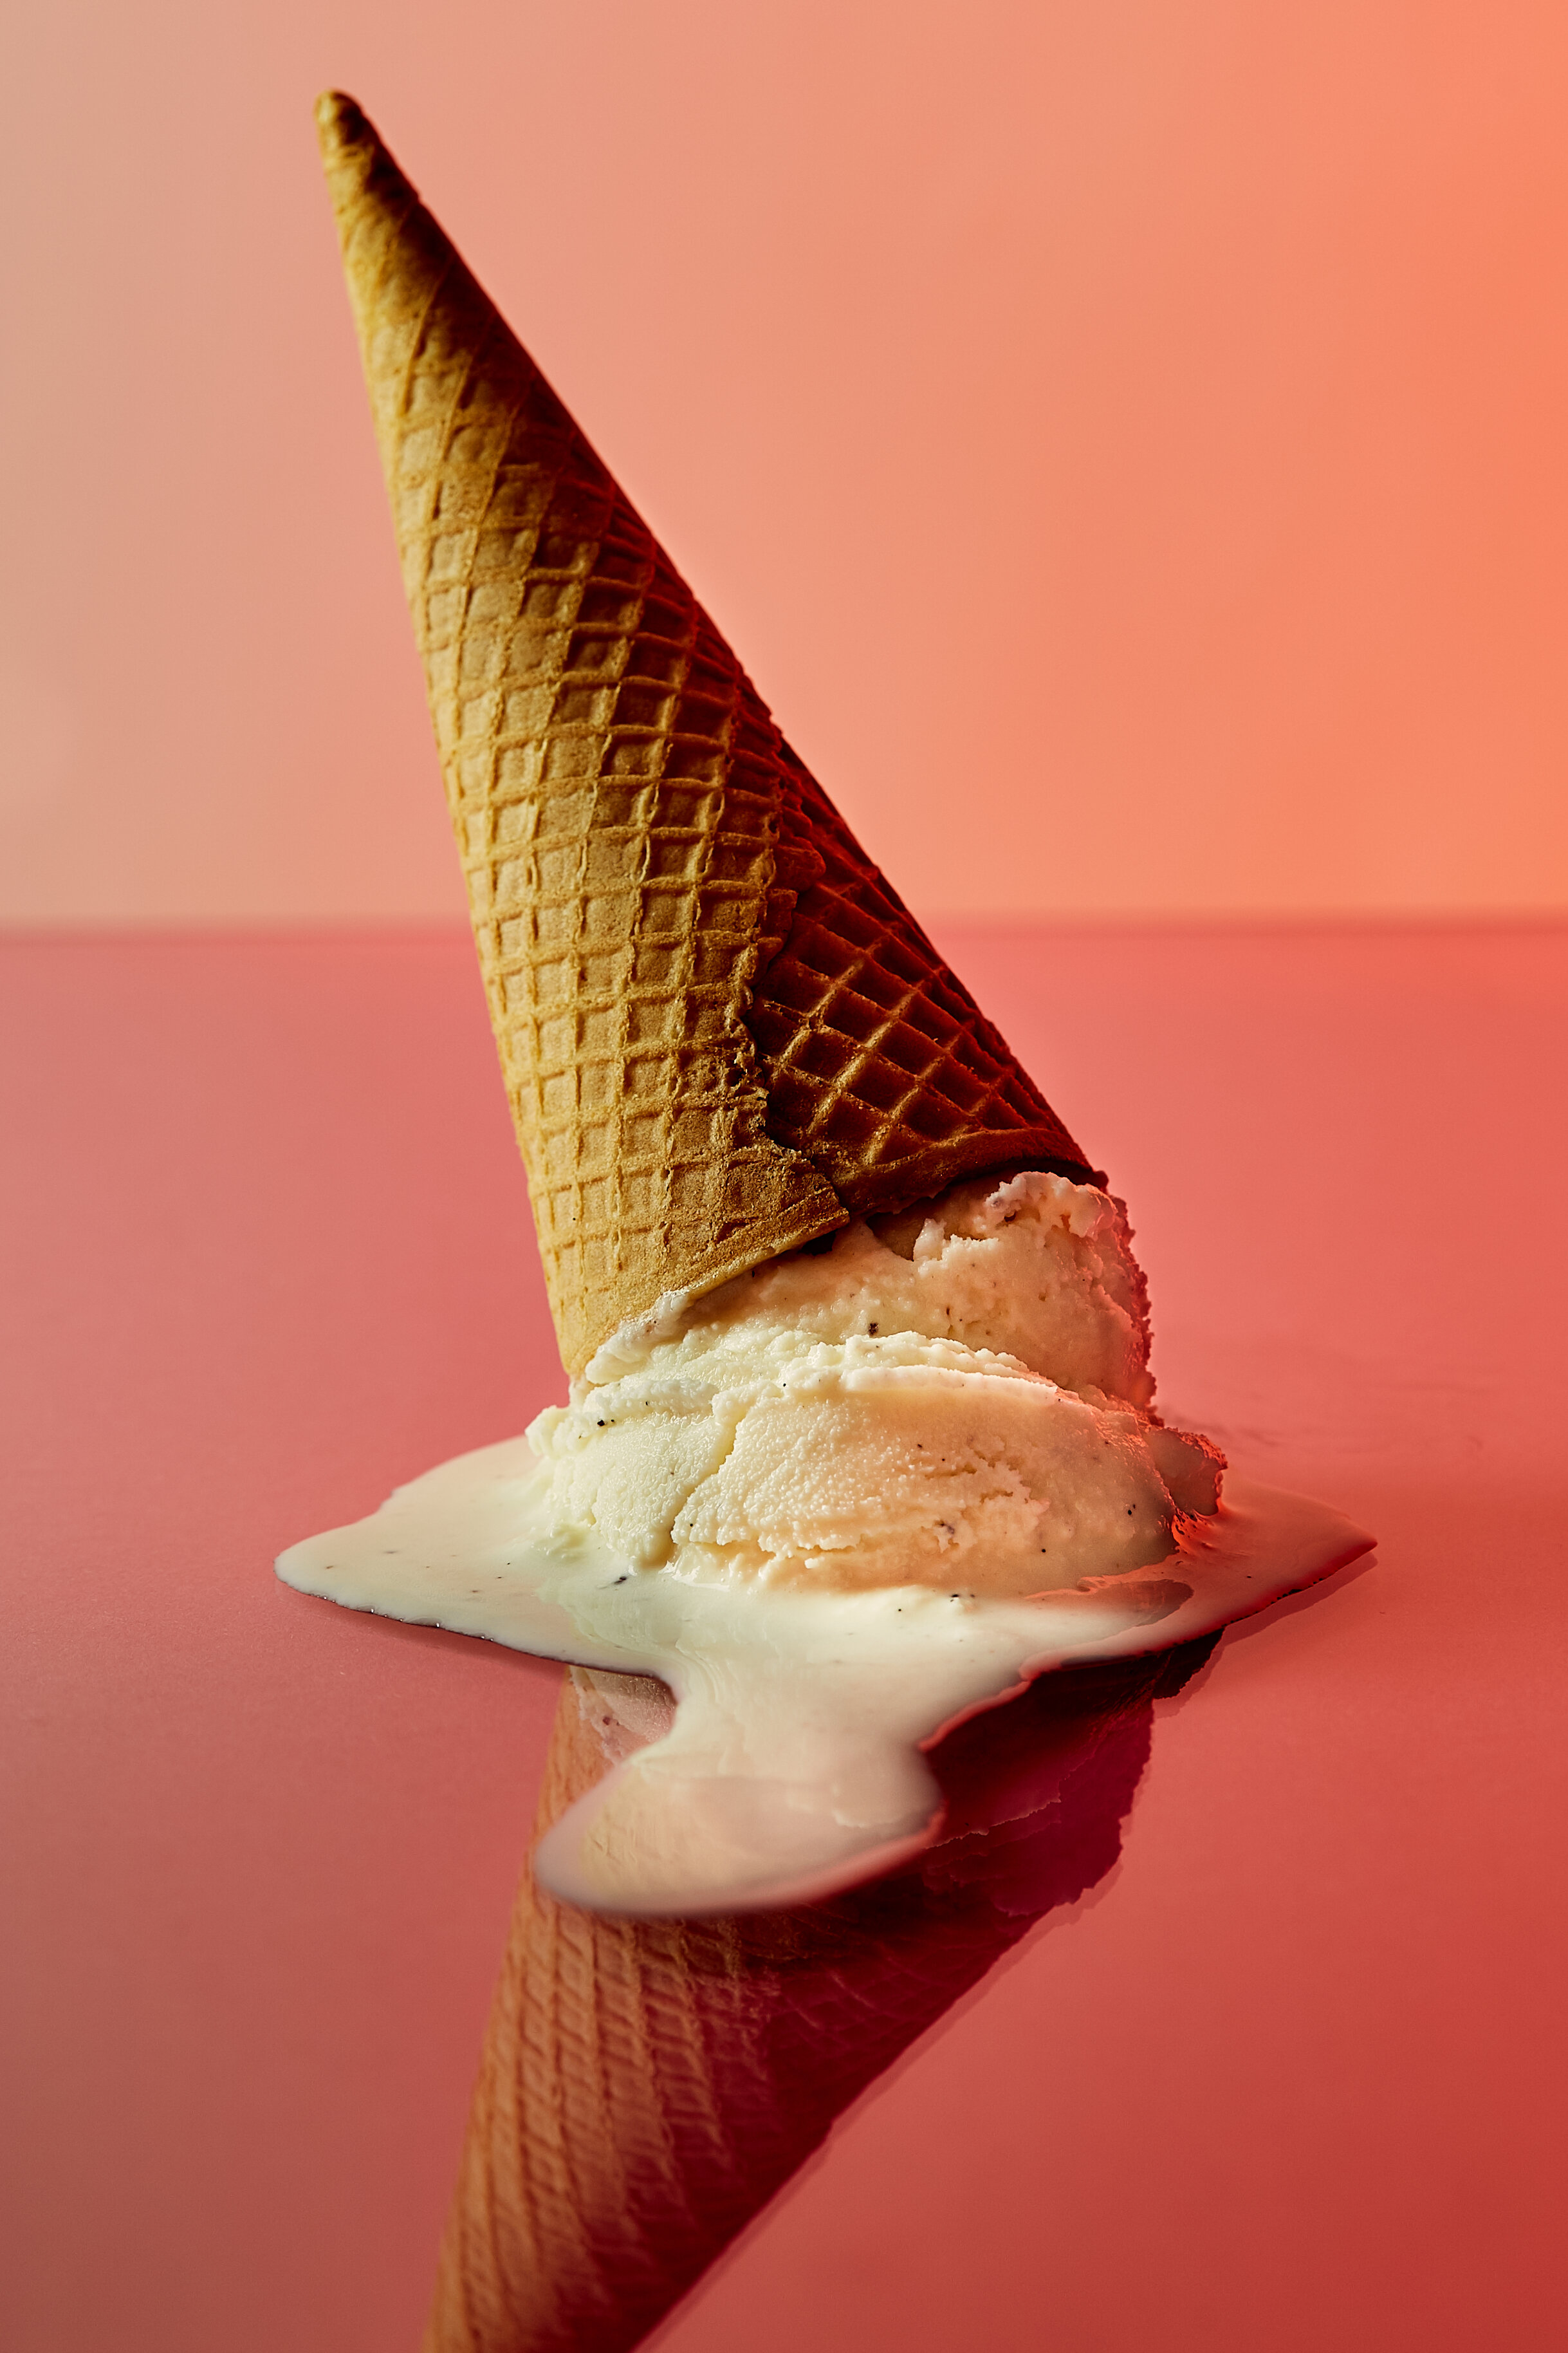 Spilled Ice Cream Cone